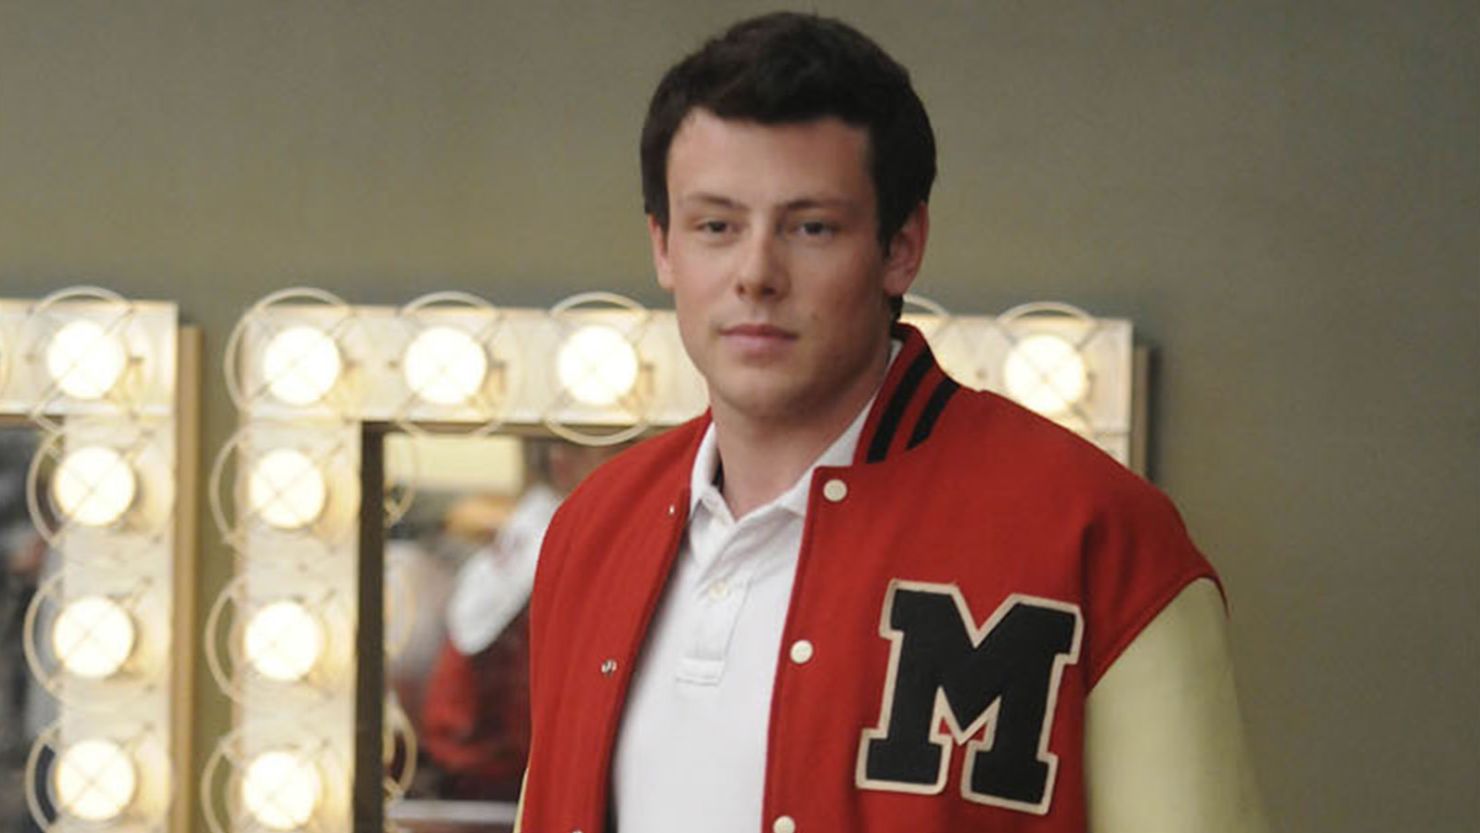 Glee' Recap: Start Spreading the News